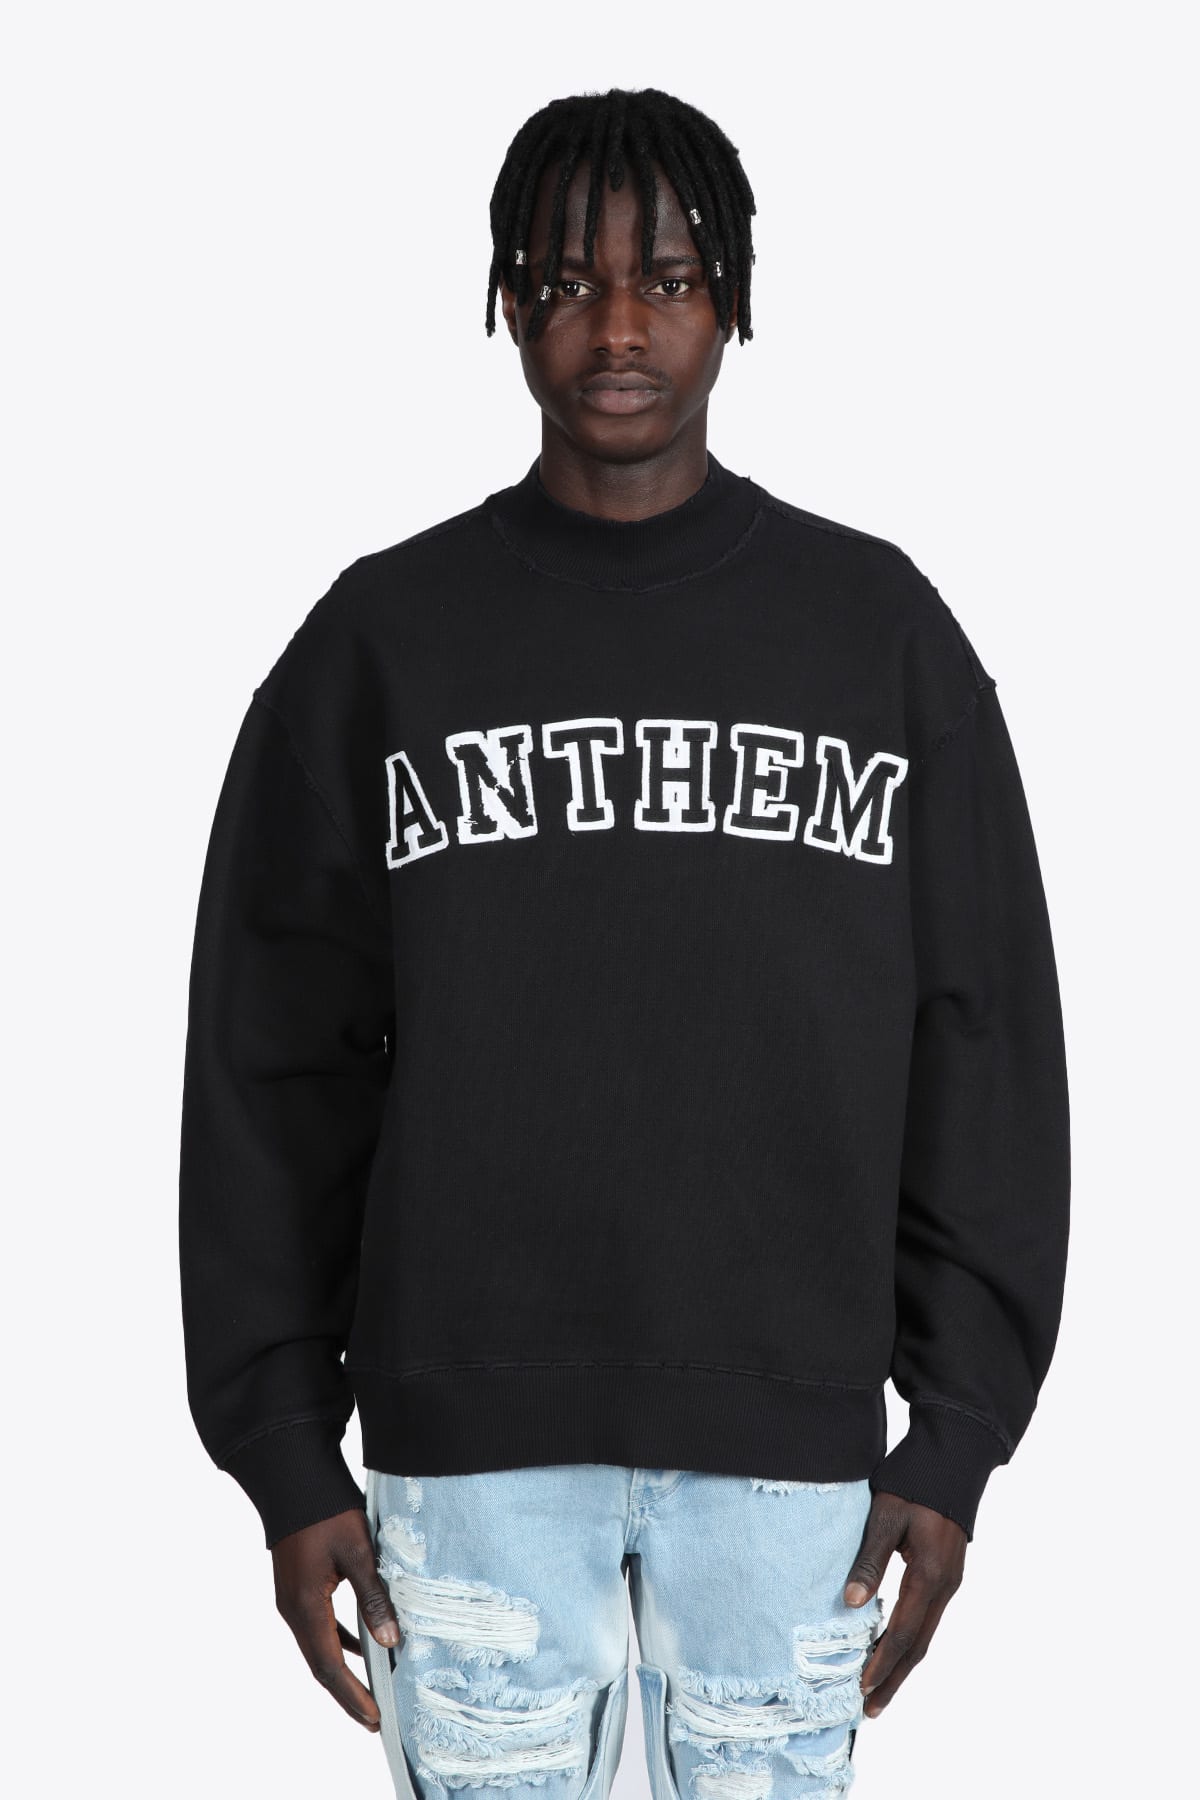 032c Oversized Anthem Sweatshirt Black cotton Anthem sweatshirt